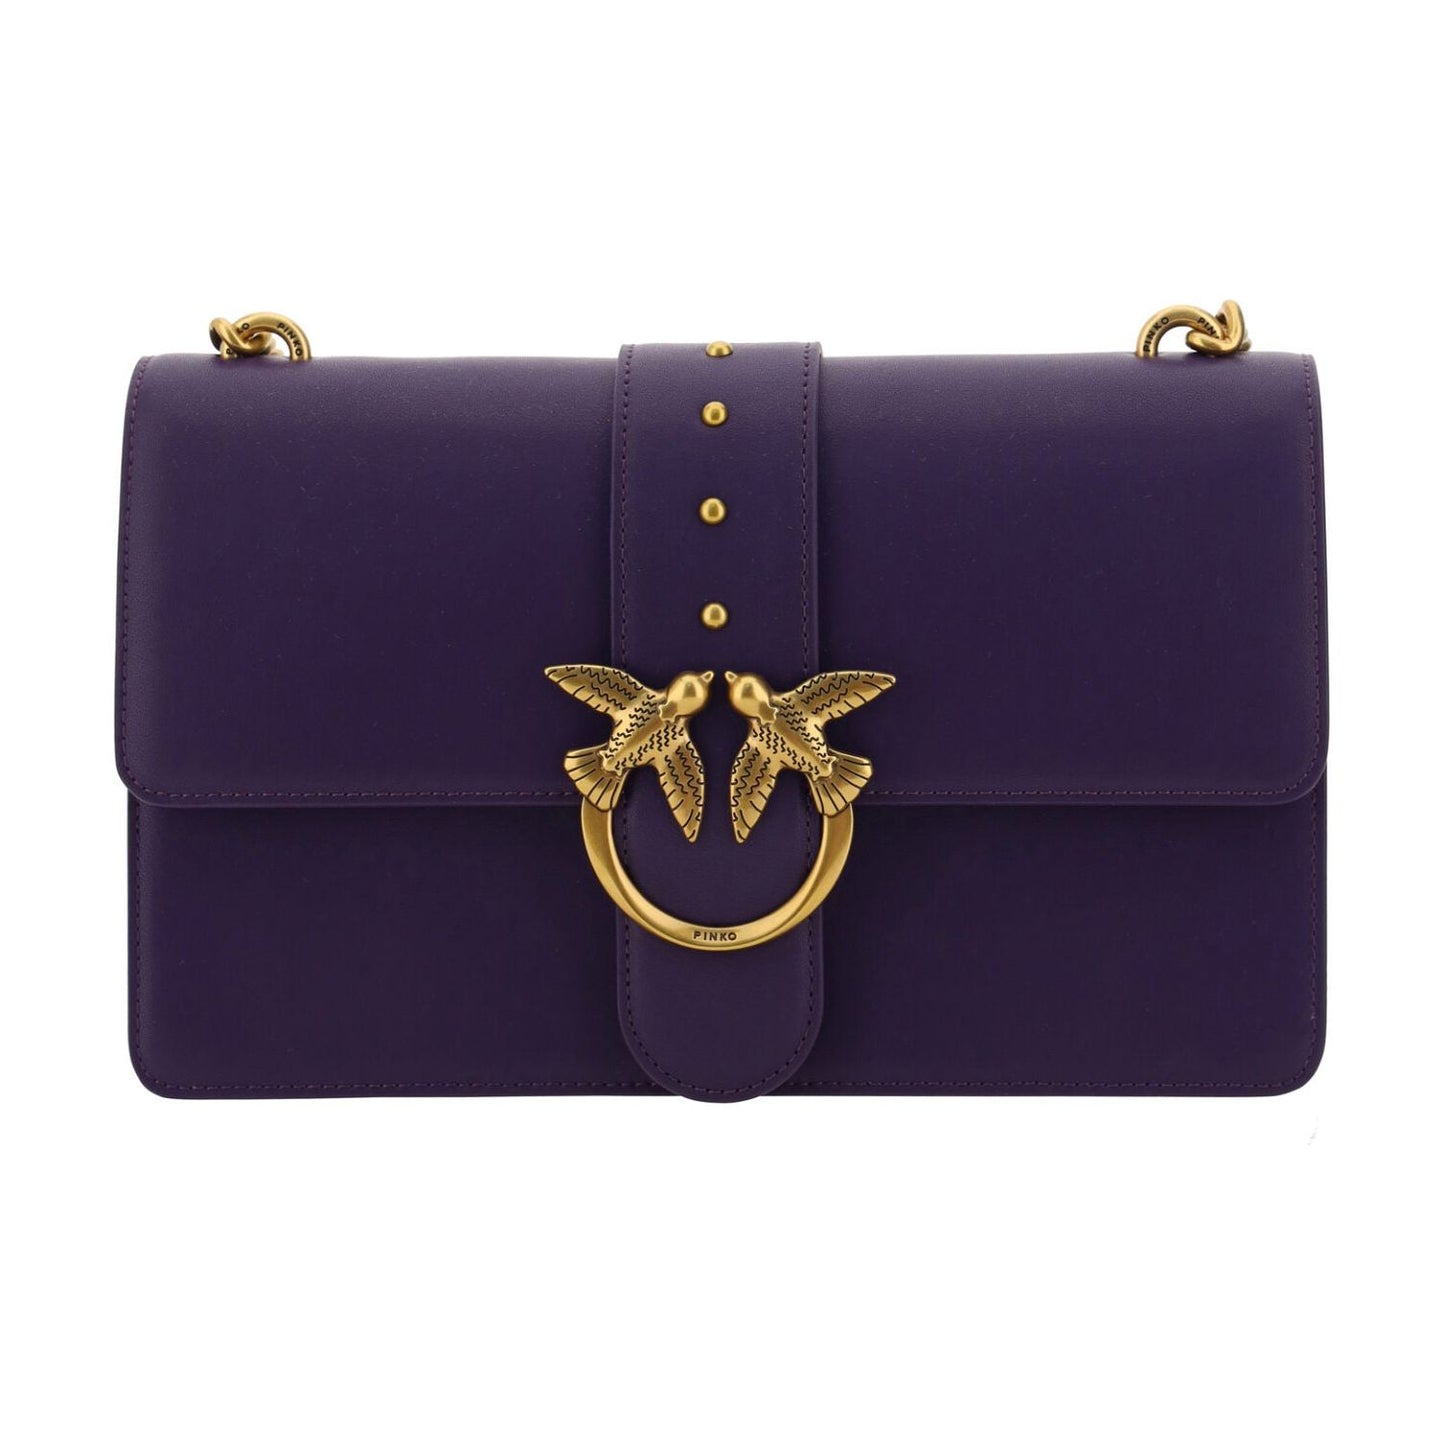 PINKO Elegant Purple Mini Shoulder Bag with Gold Accents purple-leather-love-one-classic-shoulder-bag